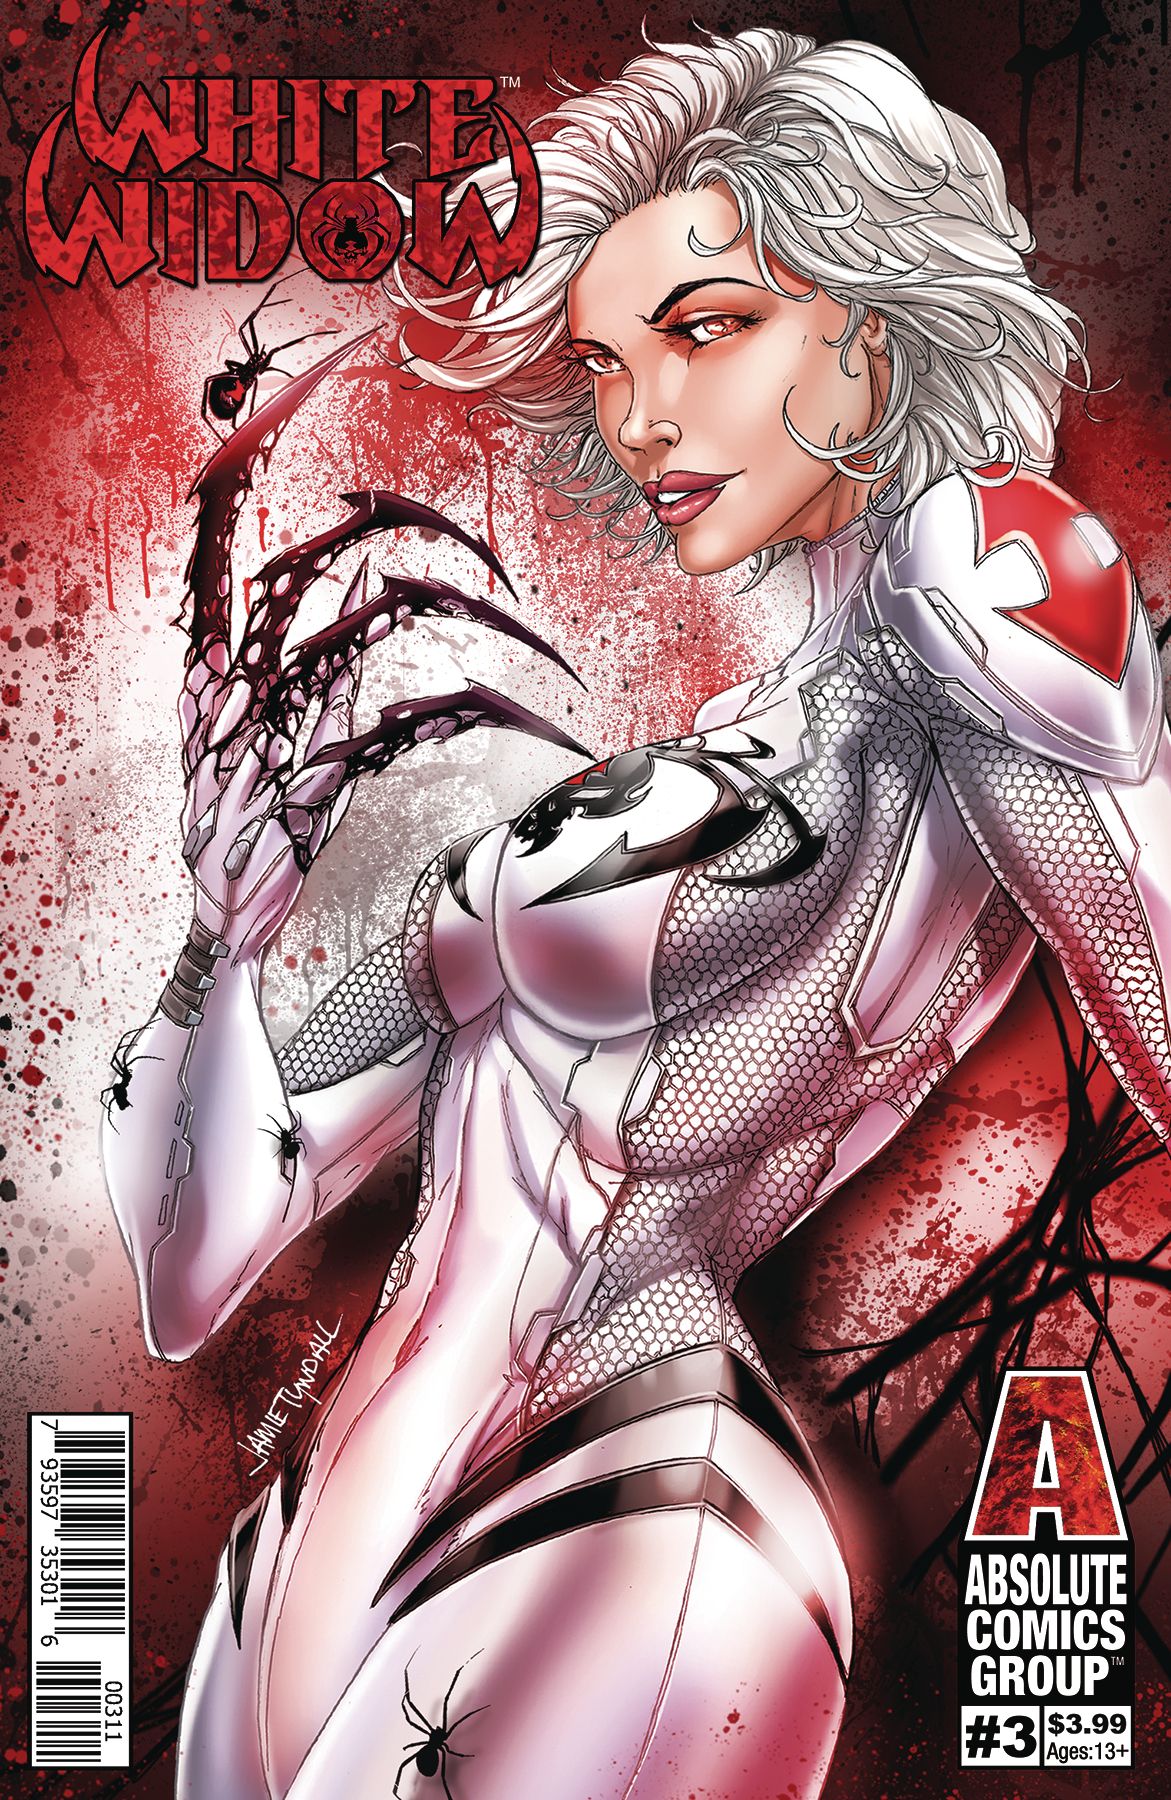 White Widow #3 Comic